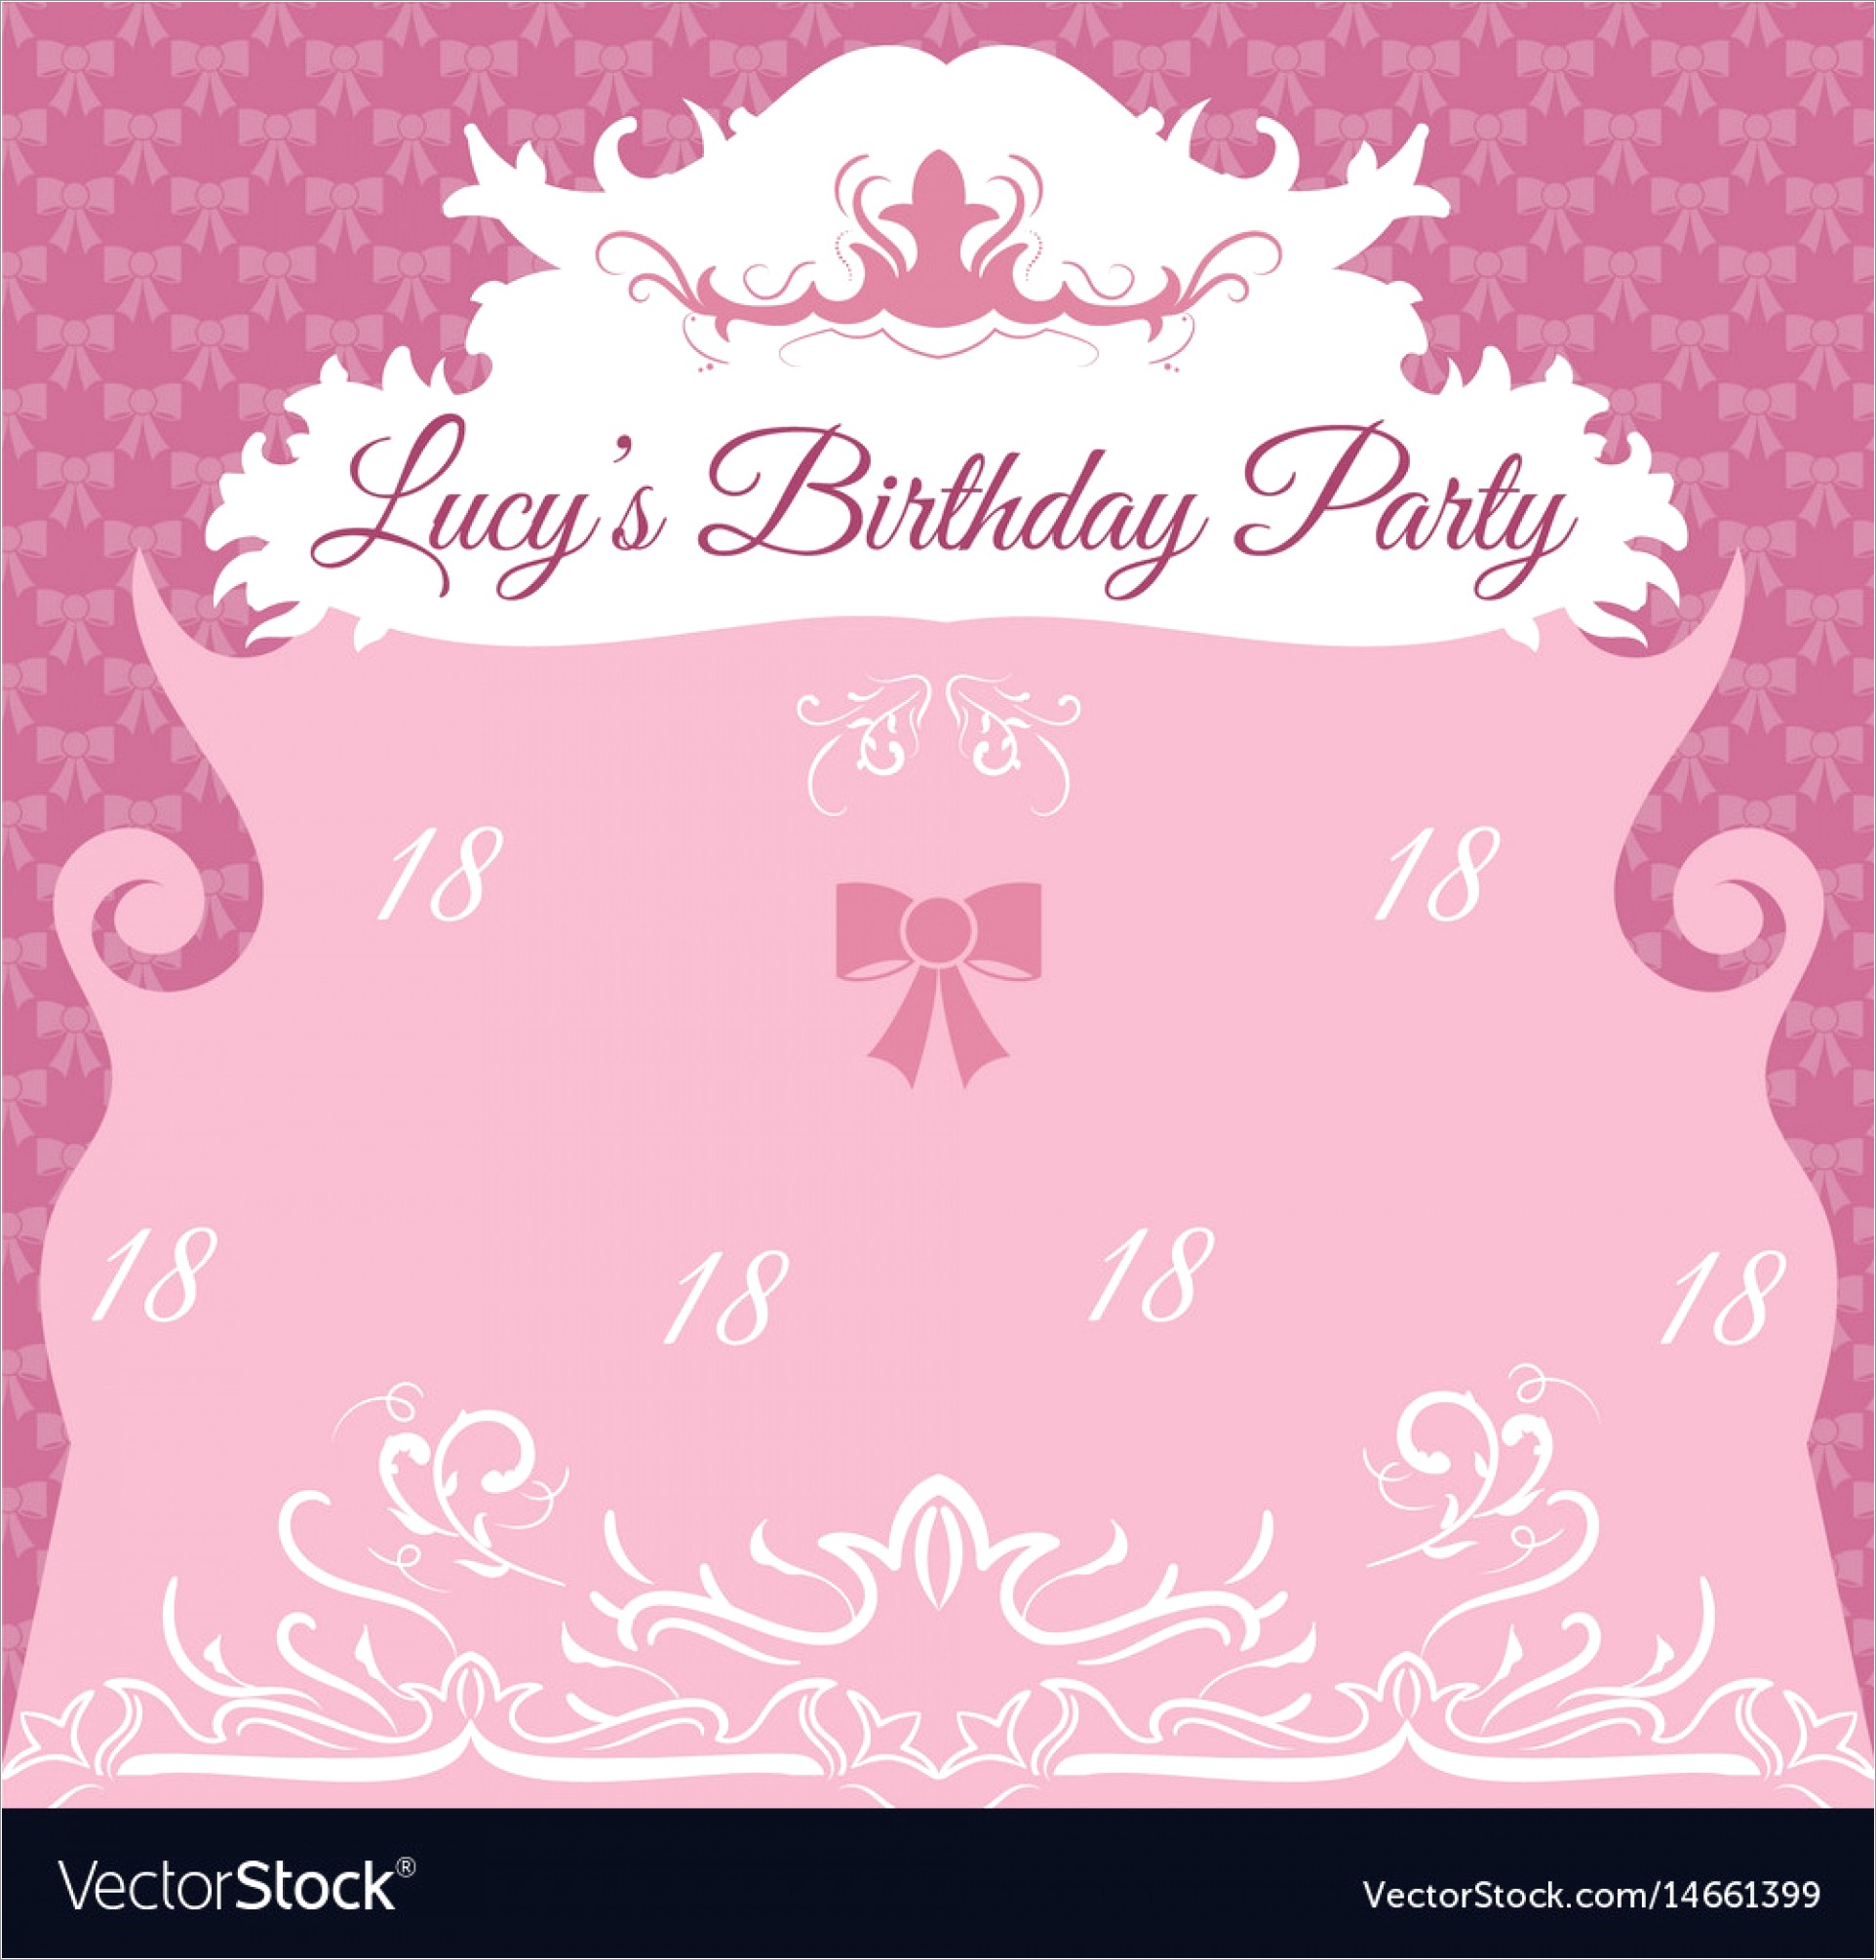 Free Online Invitation Card Design For Birthday